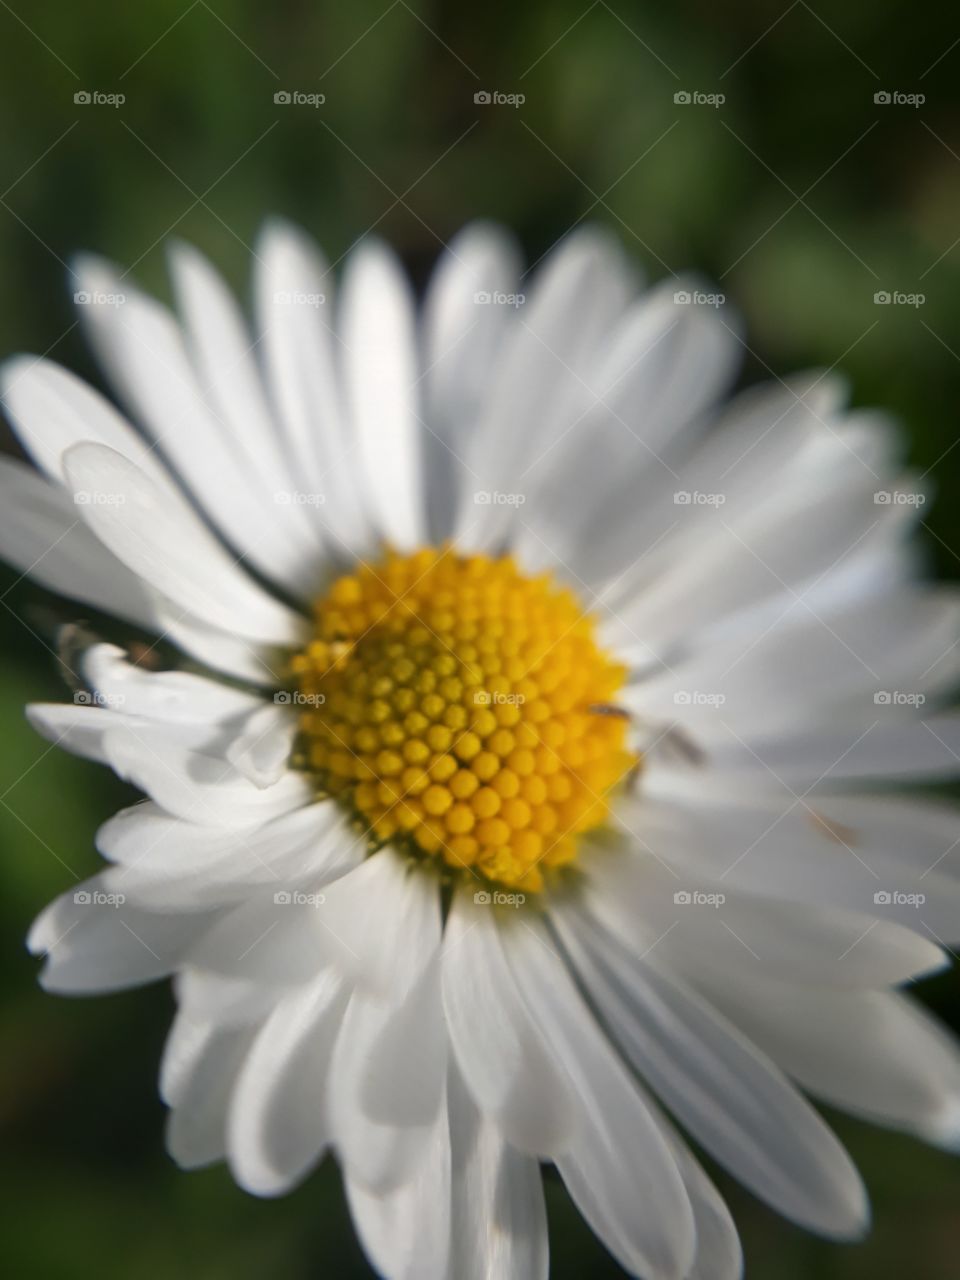 Daisy flower in the spring garden macro view